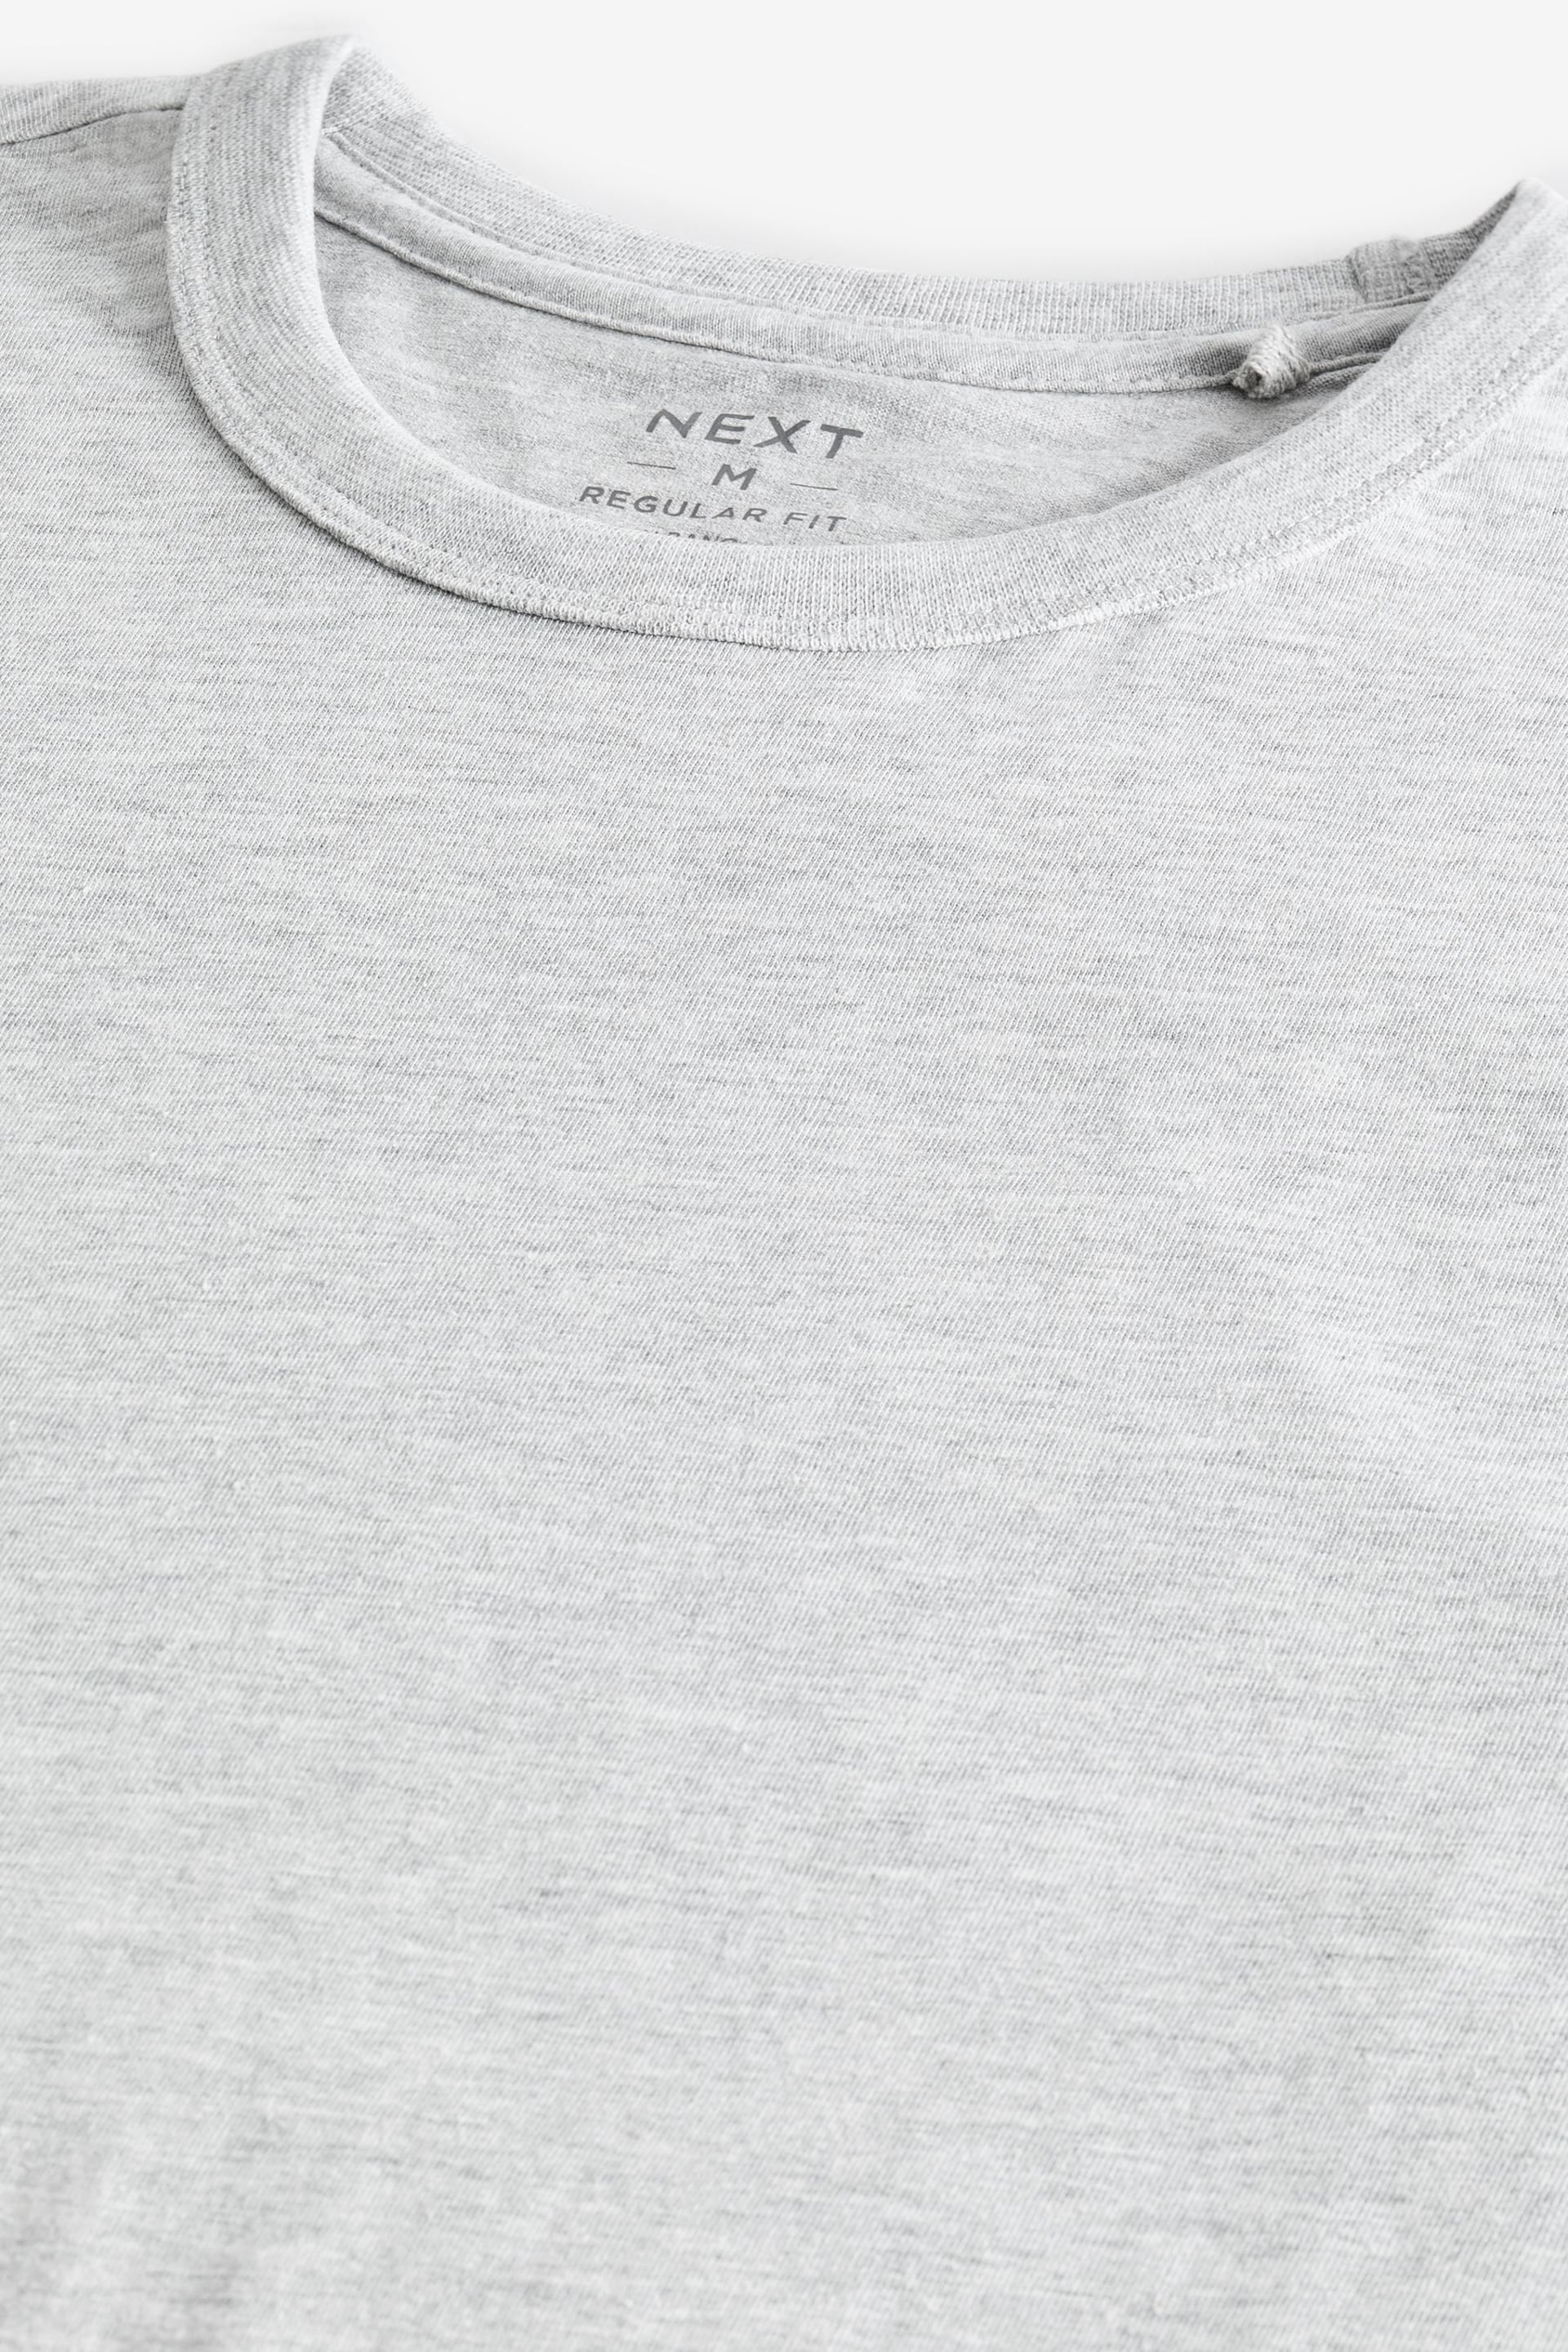 Grey Marl Everyday Crew Neck T-Shirt - Image 6 of 7